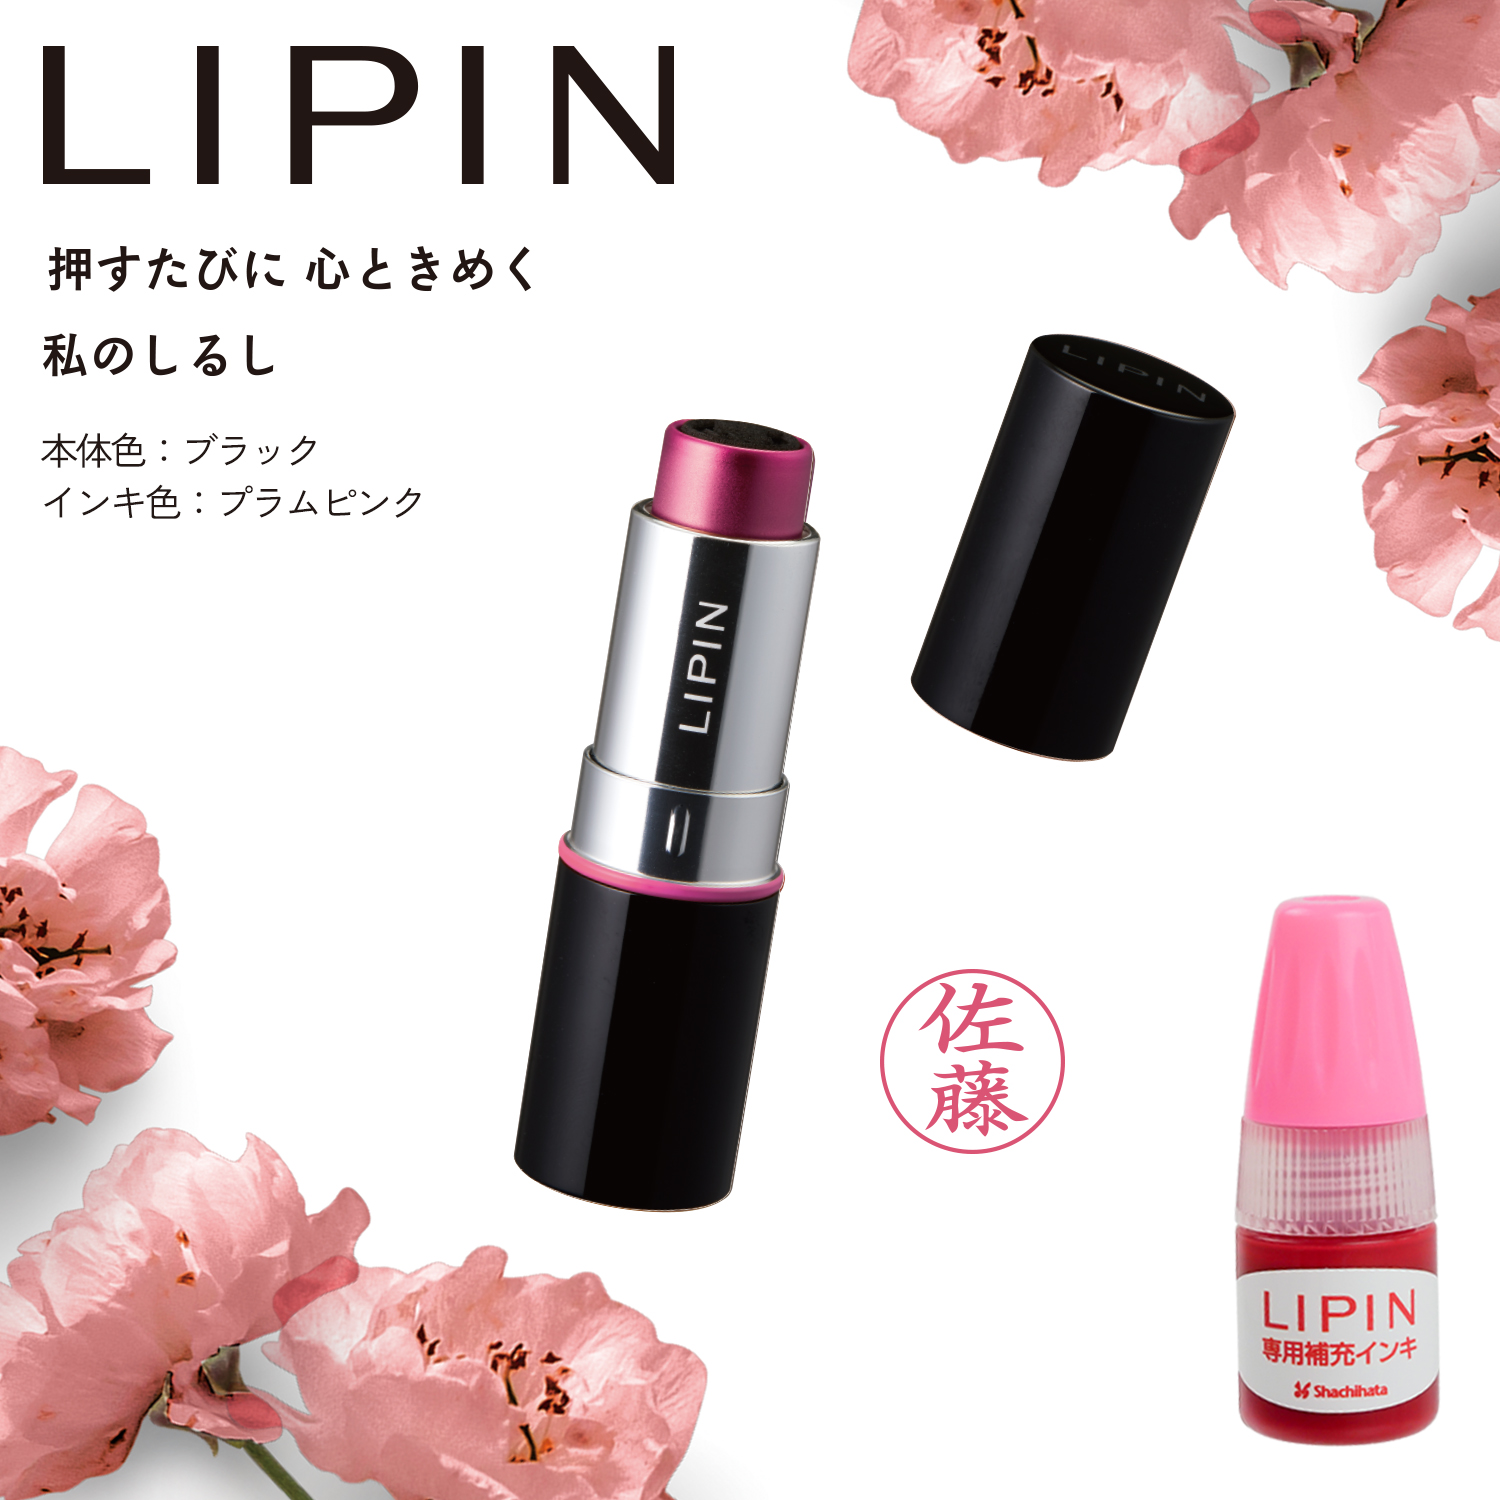 LIPIN+専用補充インキセット【本体色:ブラック/インキ色:プラムピンク】_1